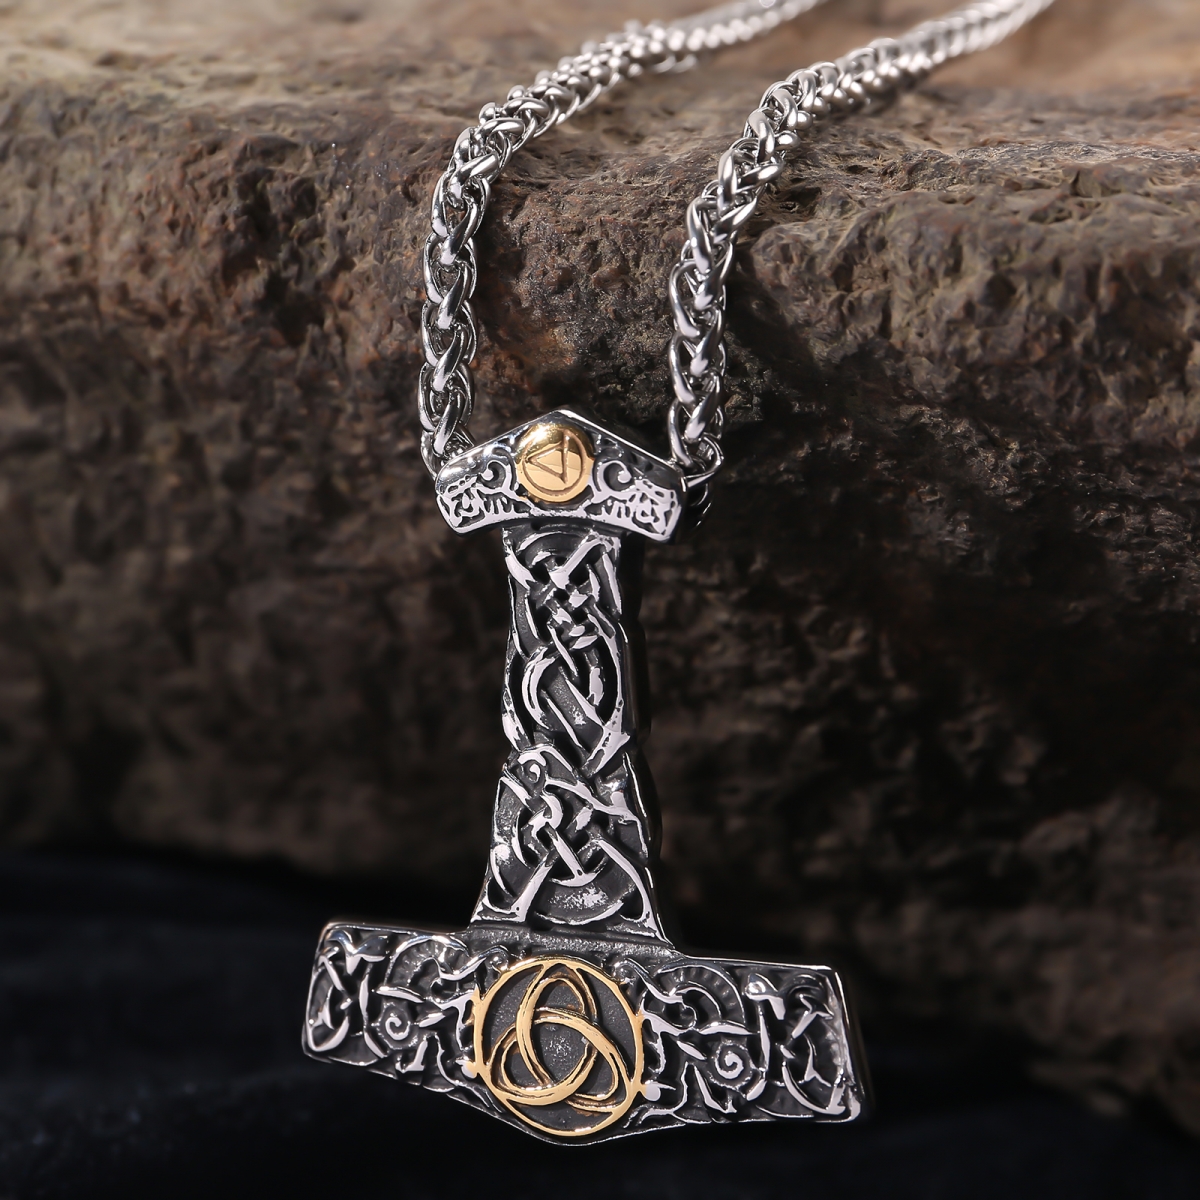 Mjolnir Necklace US$3.2/PC-NORSECOLLECTION- Viking Jewelry,Viking Necklace,Viking Bracelet,Viking Rings,Viking Mugs,Viking Accessories,Viking Crafts